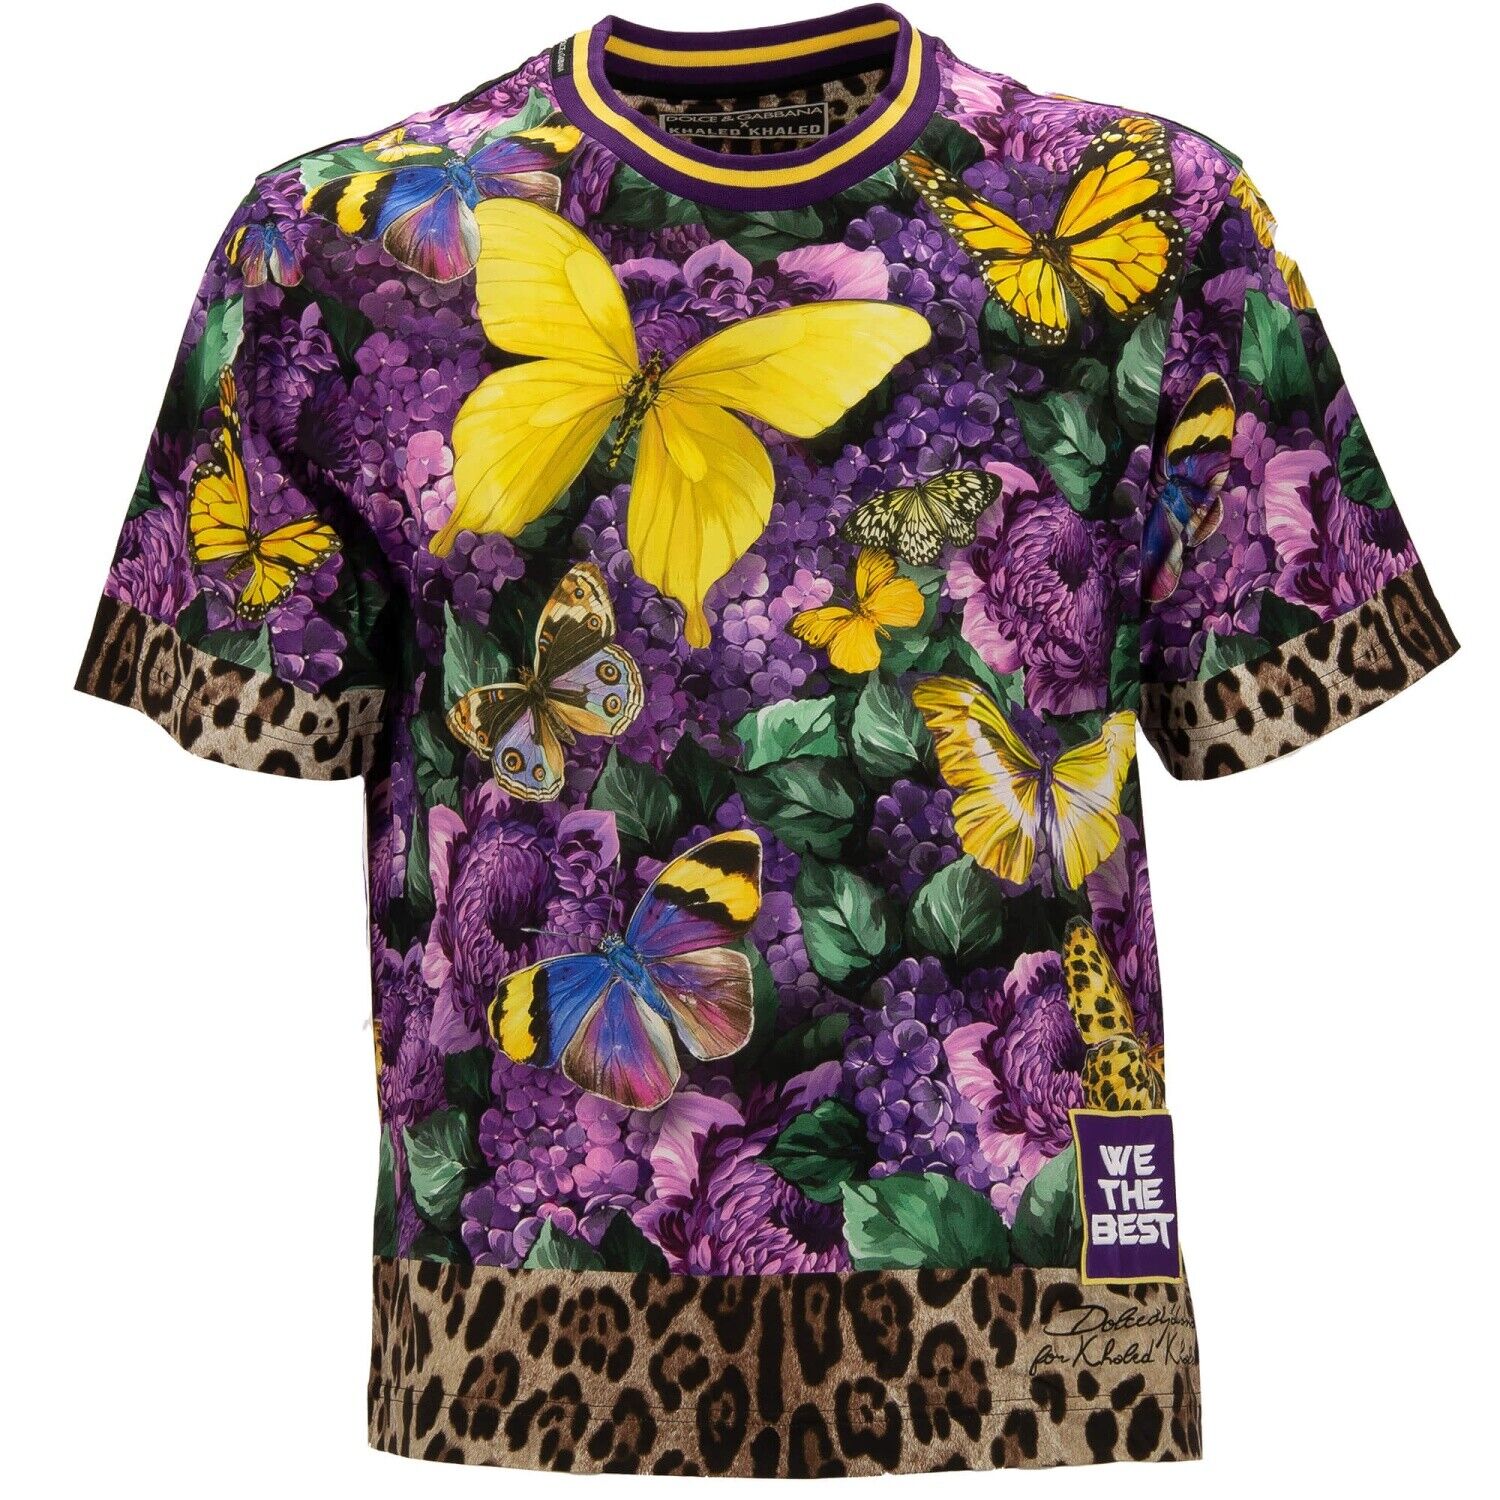 DOLCE & GABBANA x DJ KHALED Oversize T-Shirt Butterfly Leo Purple Yellow 11367